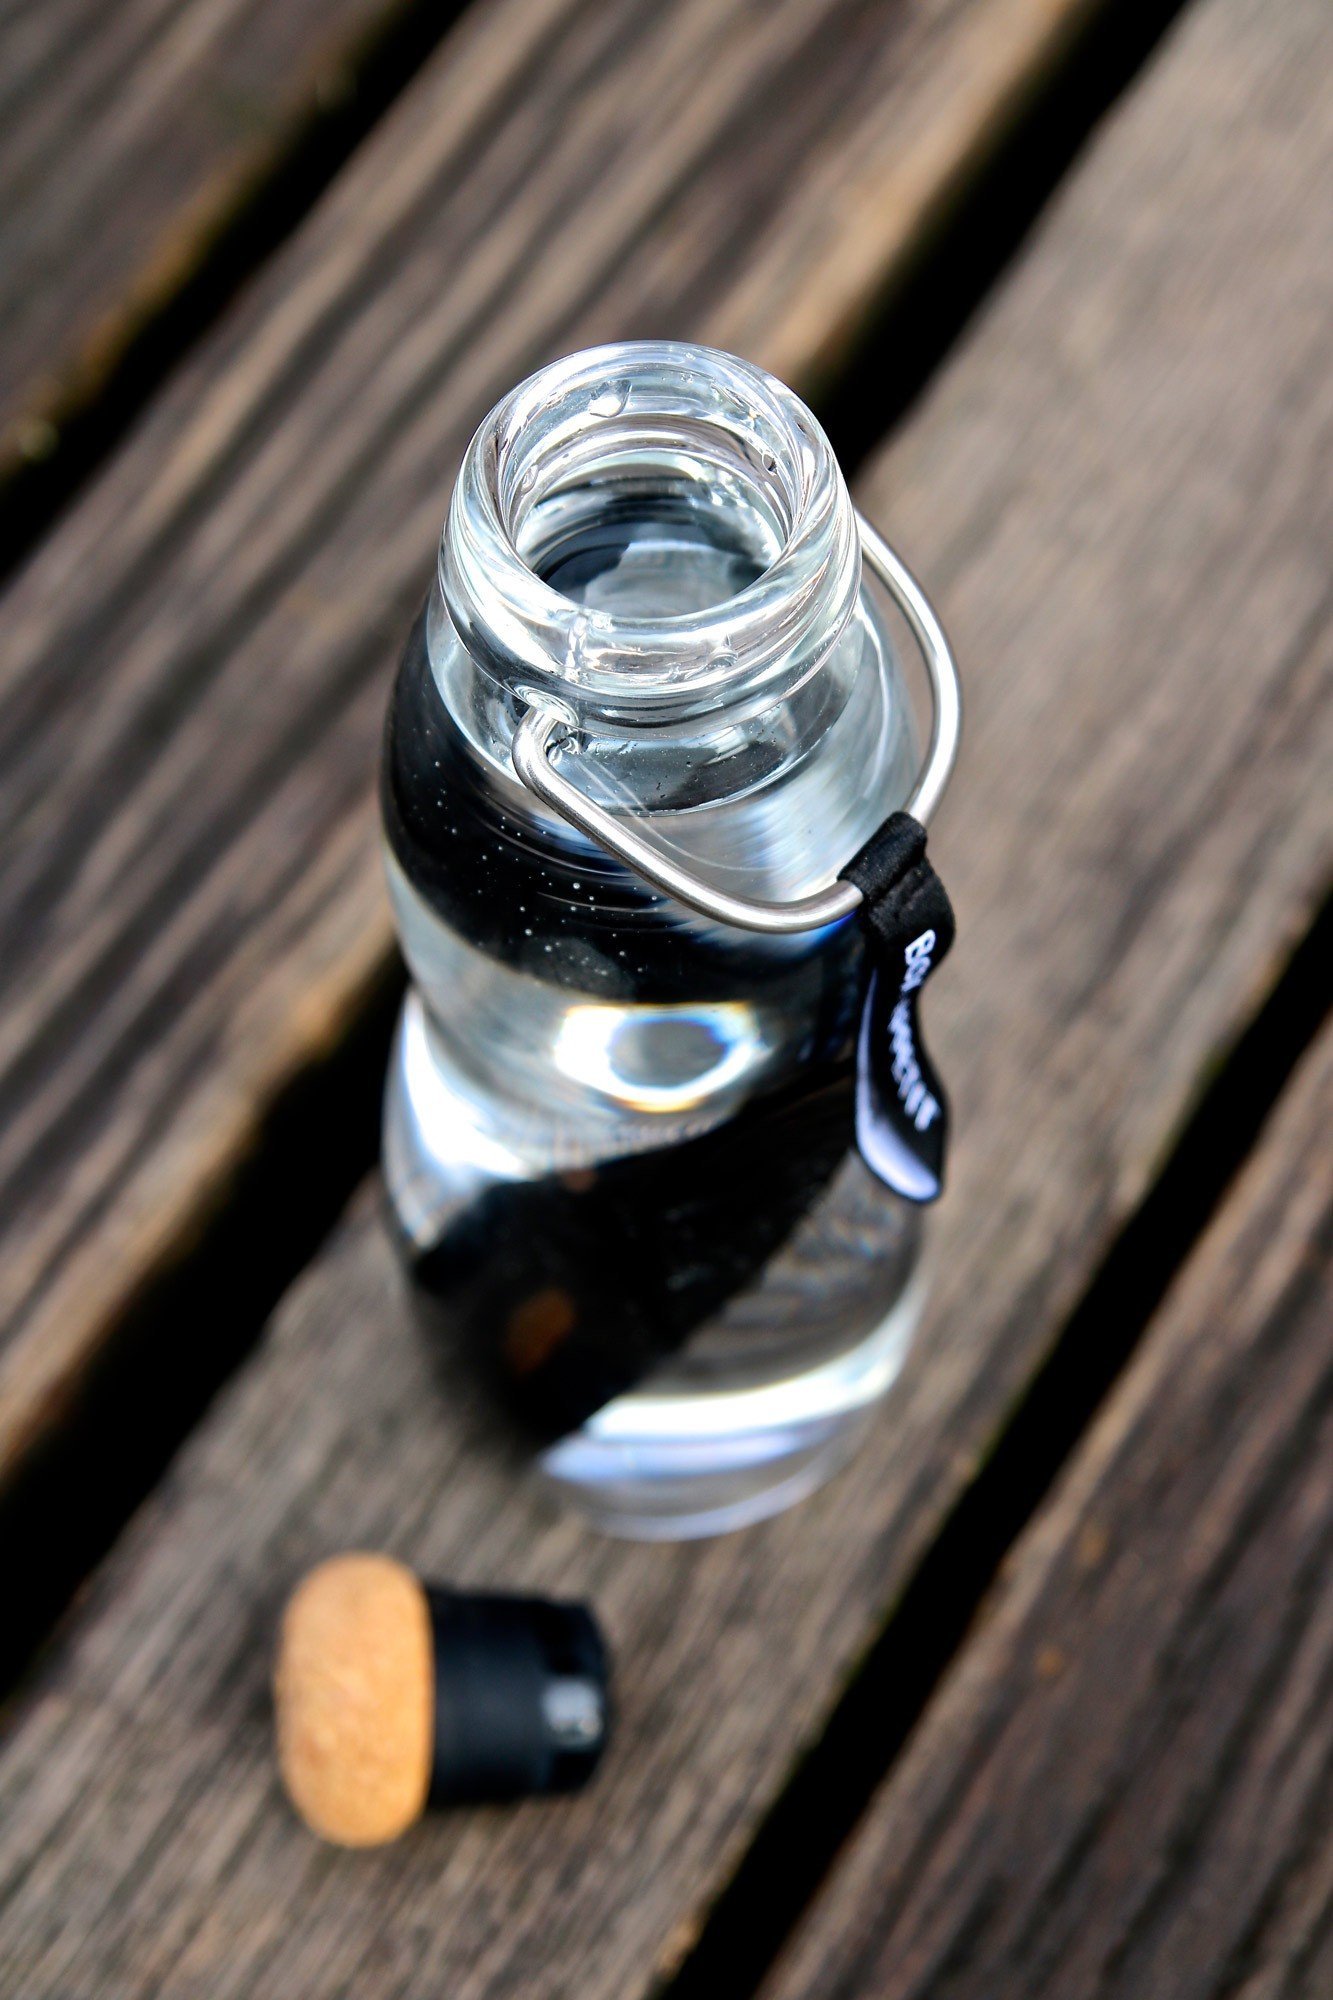 https://3fa-media.com/blackblum/black-blum-eau-good-water-bottle-with-filter-glass__egg005-3-s2500x2500.jpg